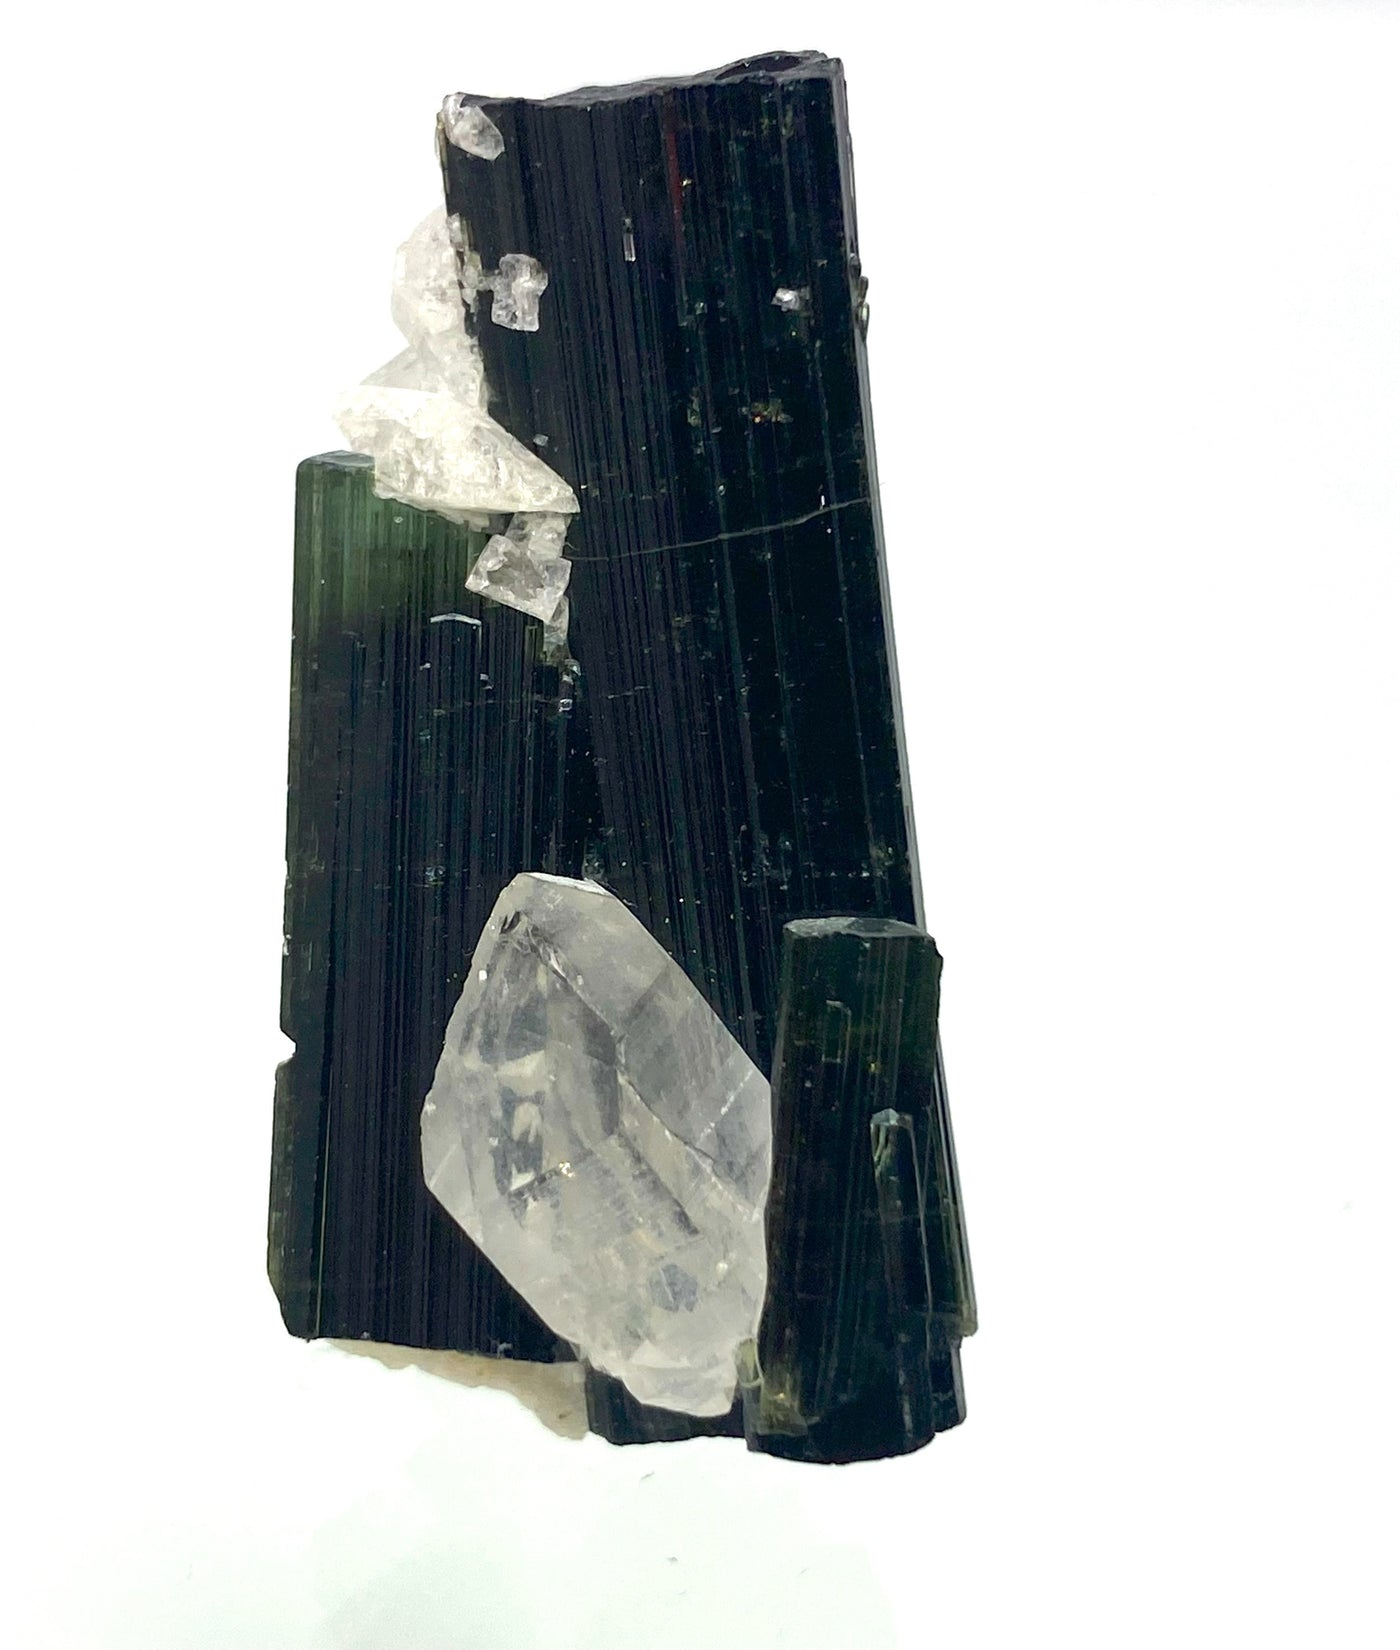 Bicolor Turmalin "Greencap", Bergkristall, Albit, Stak Nala, Haramosh Mtns., Pakistan